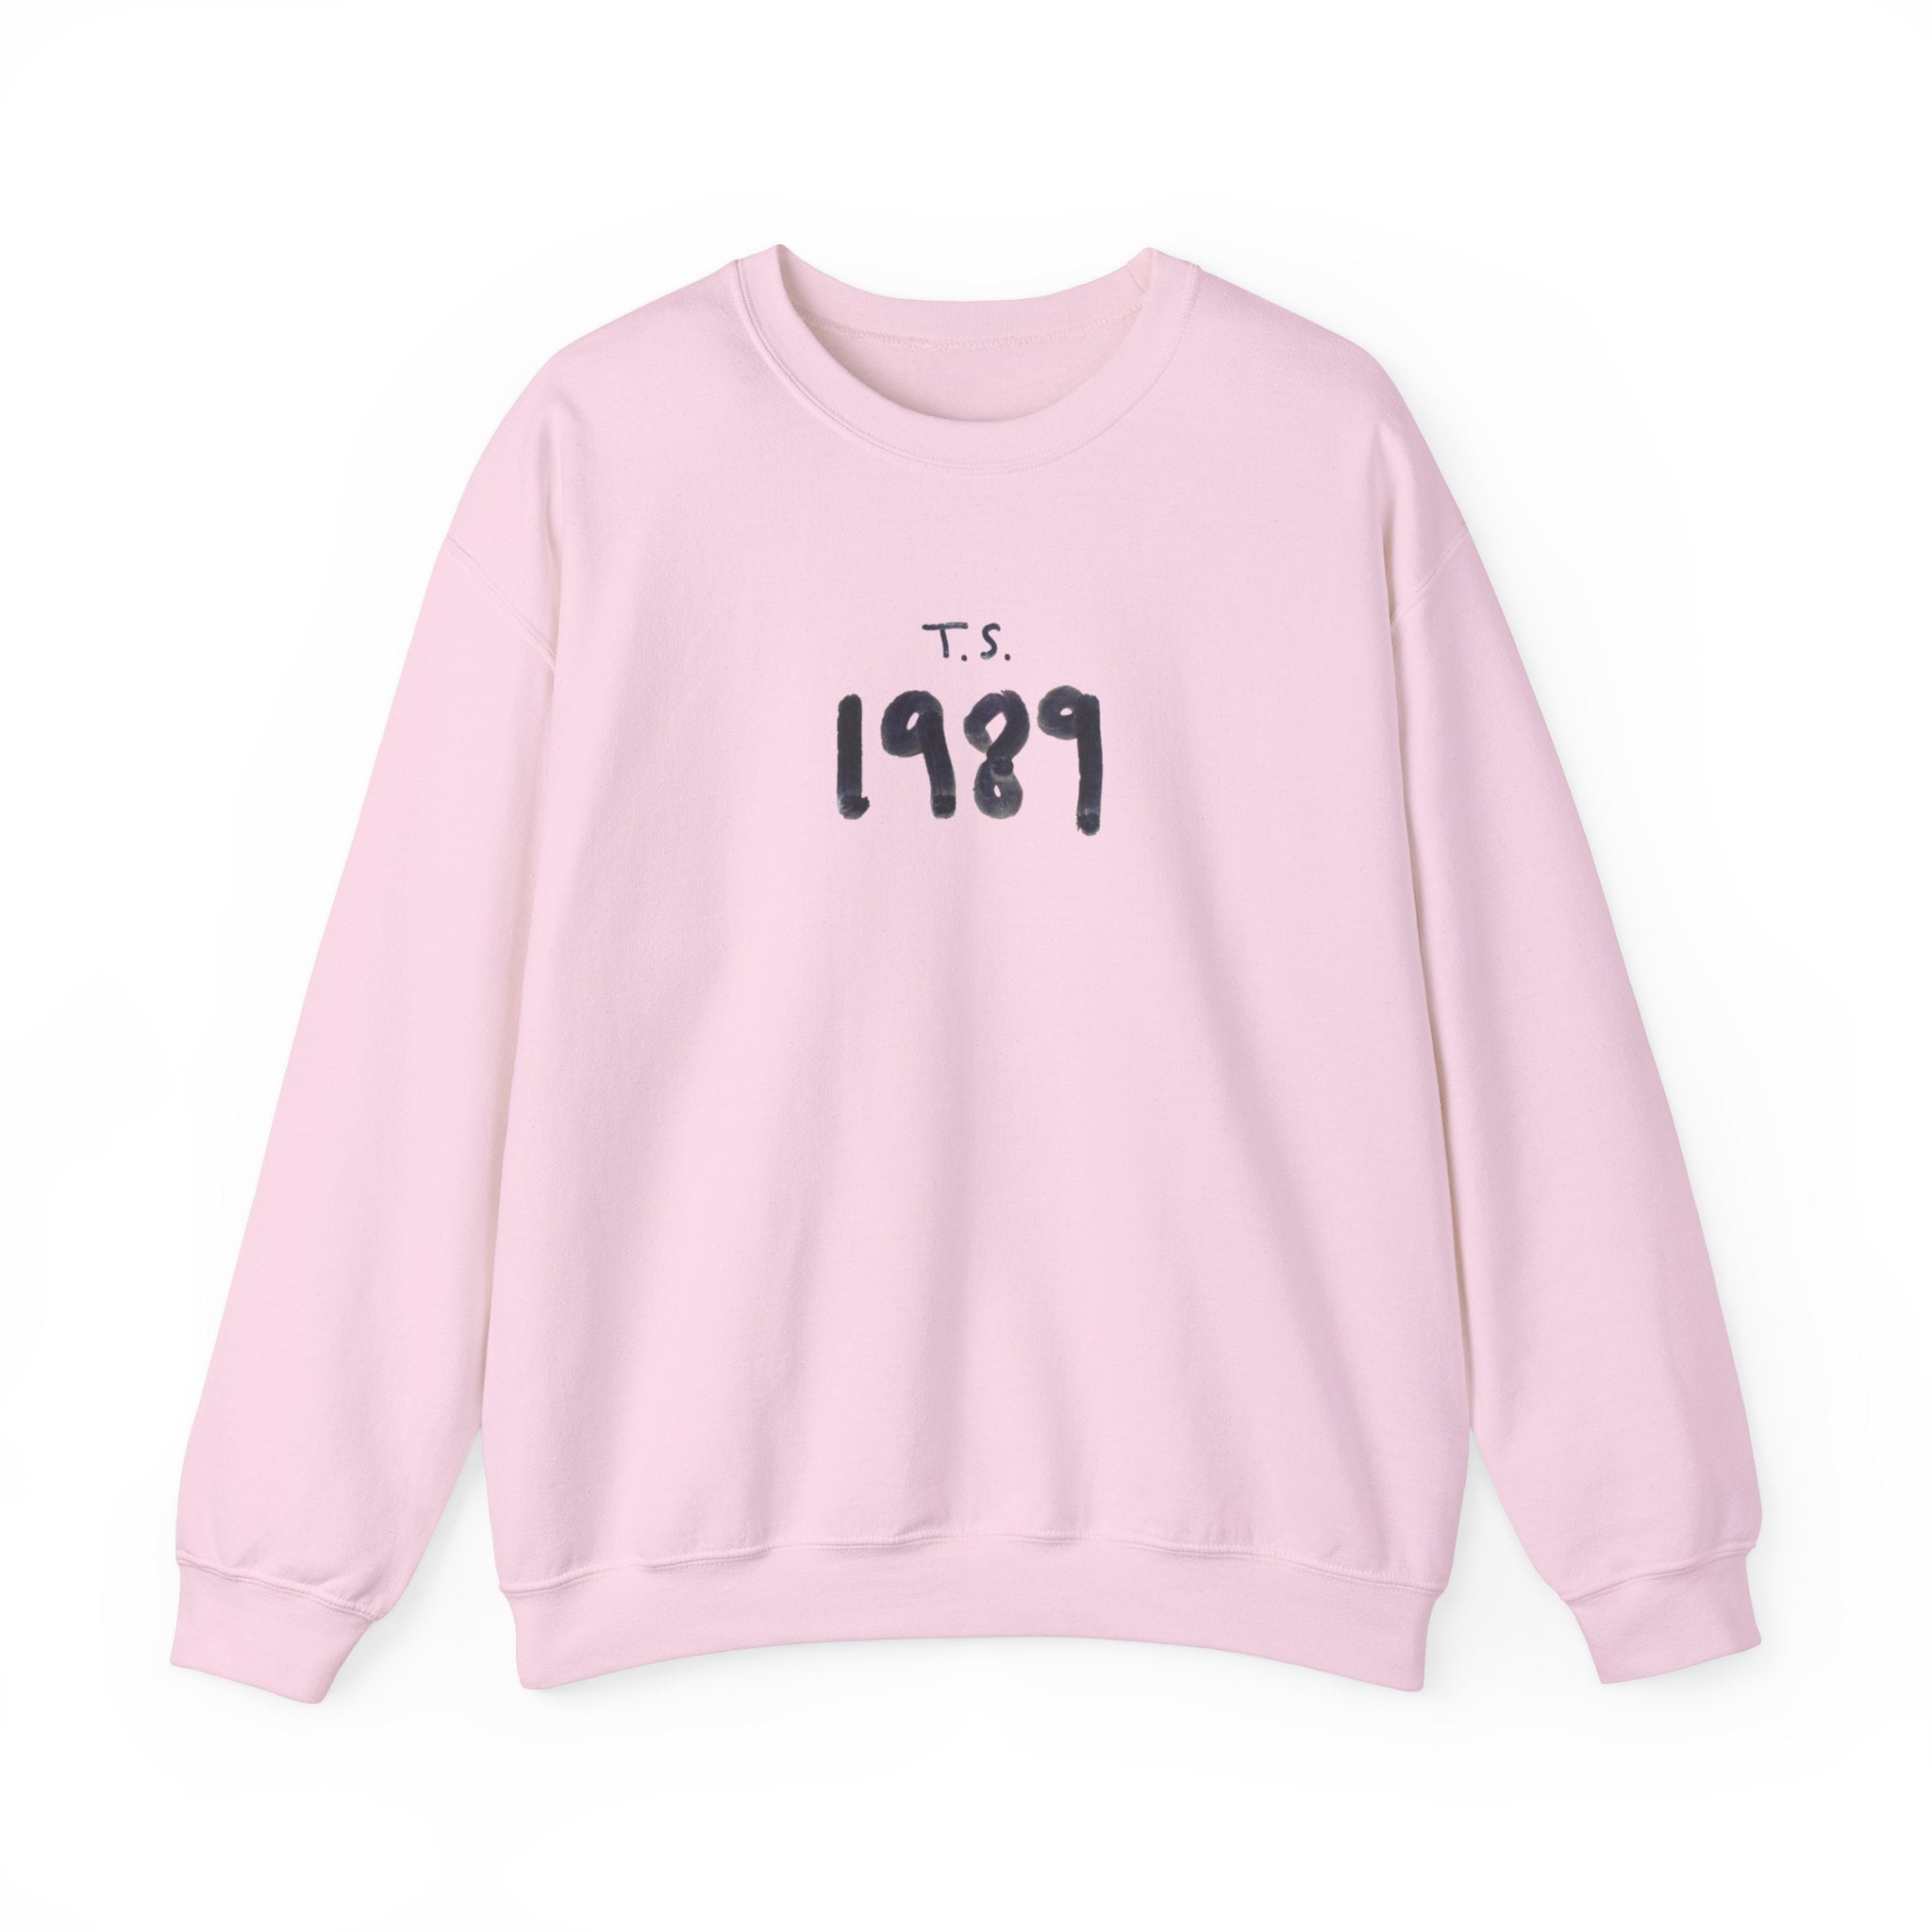 1989 Sweatshirt | Taylor Swift